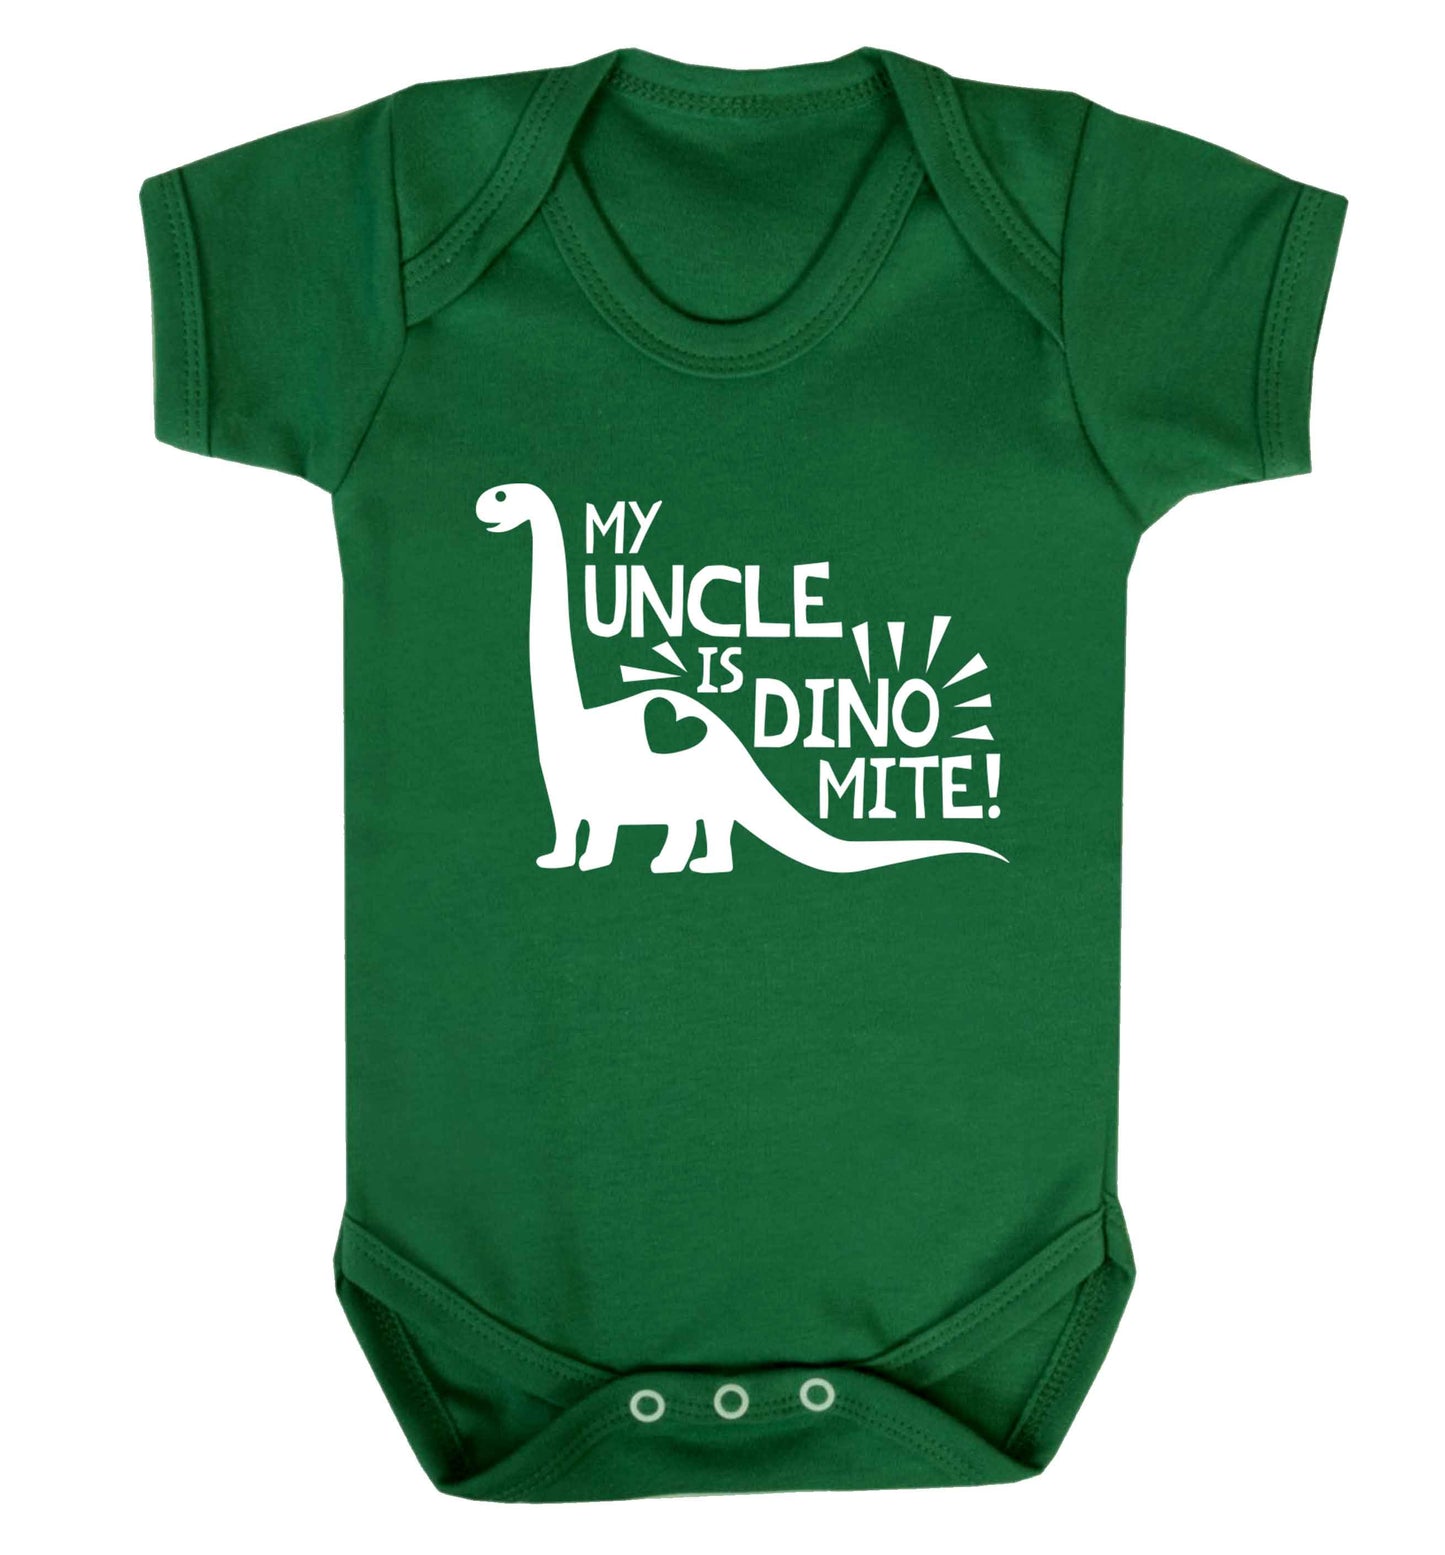 My uncle is dinomite! Baby Vest green 18-24 months